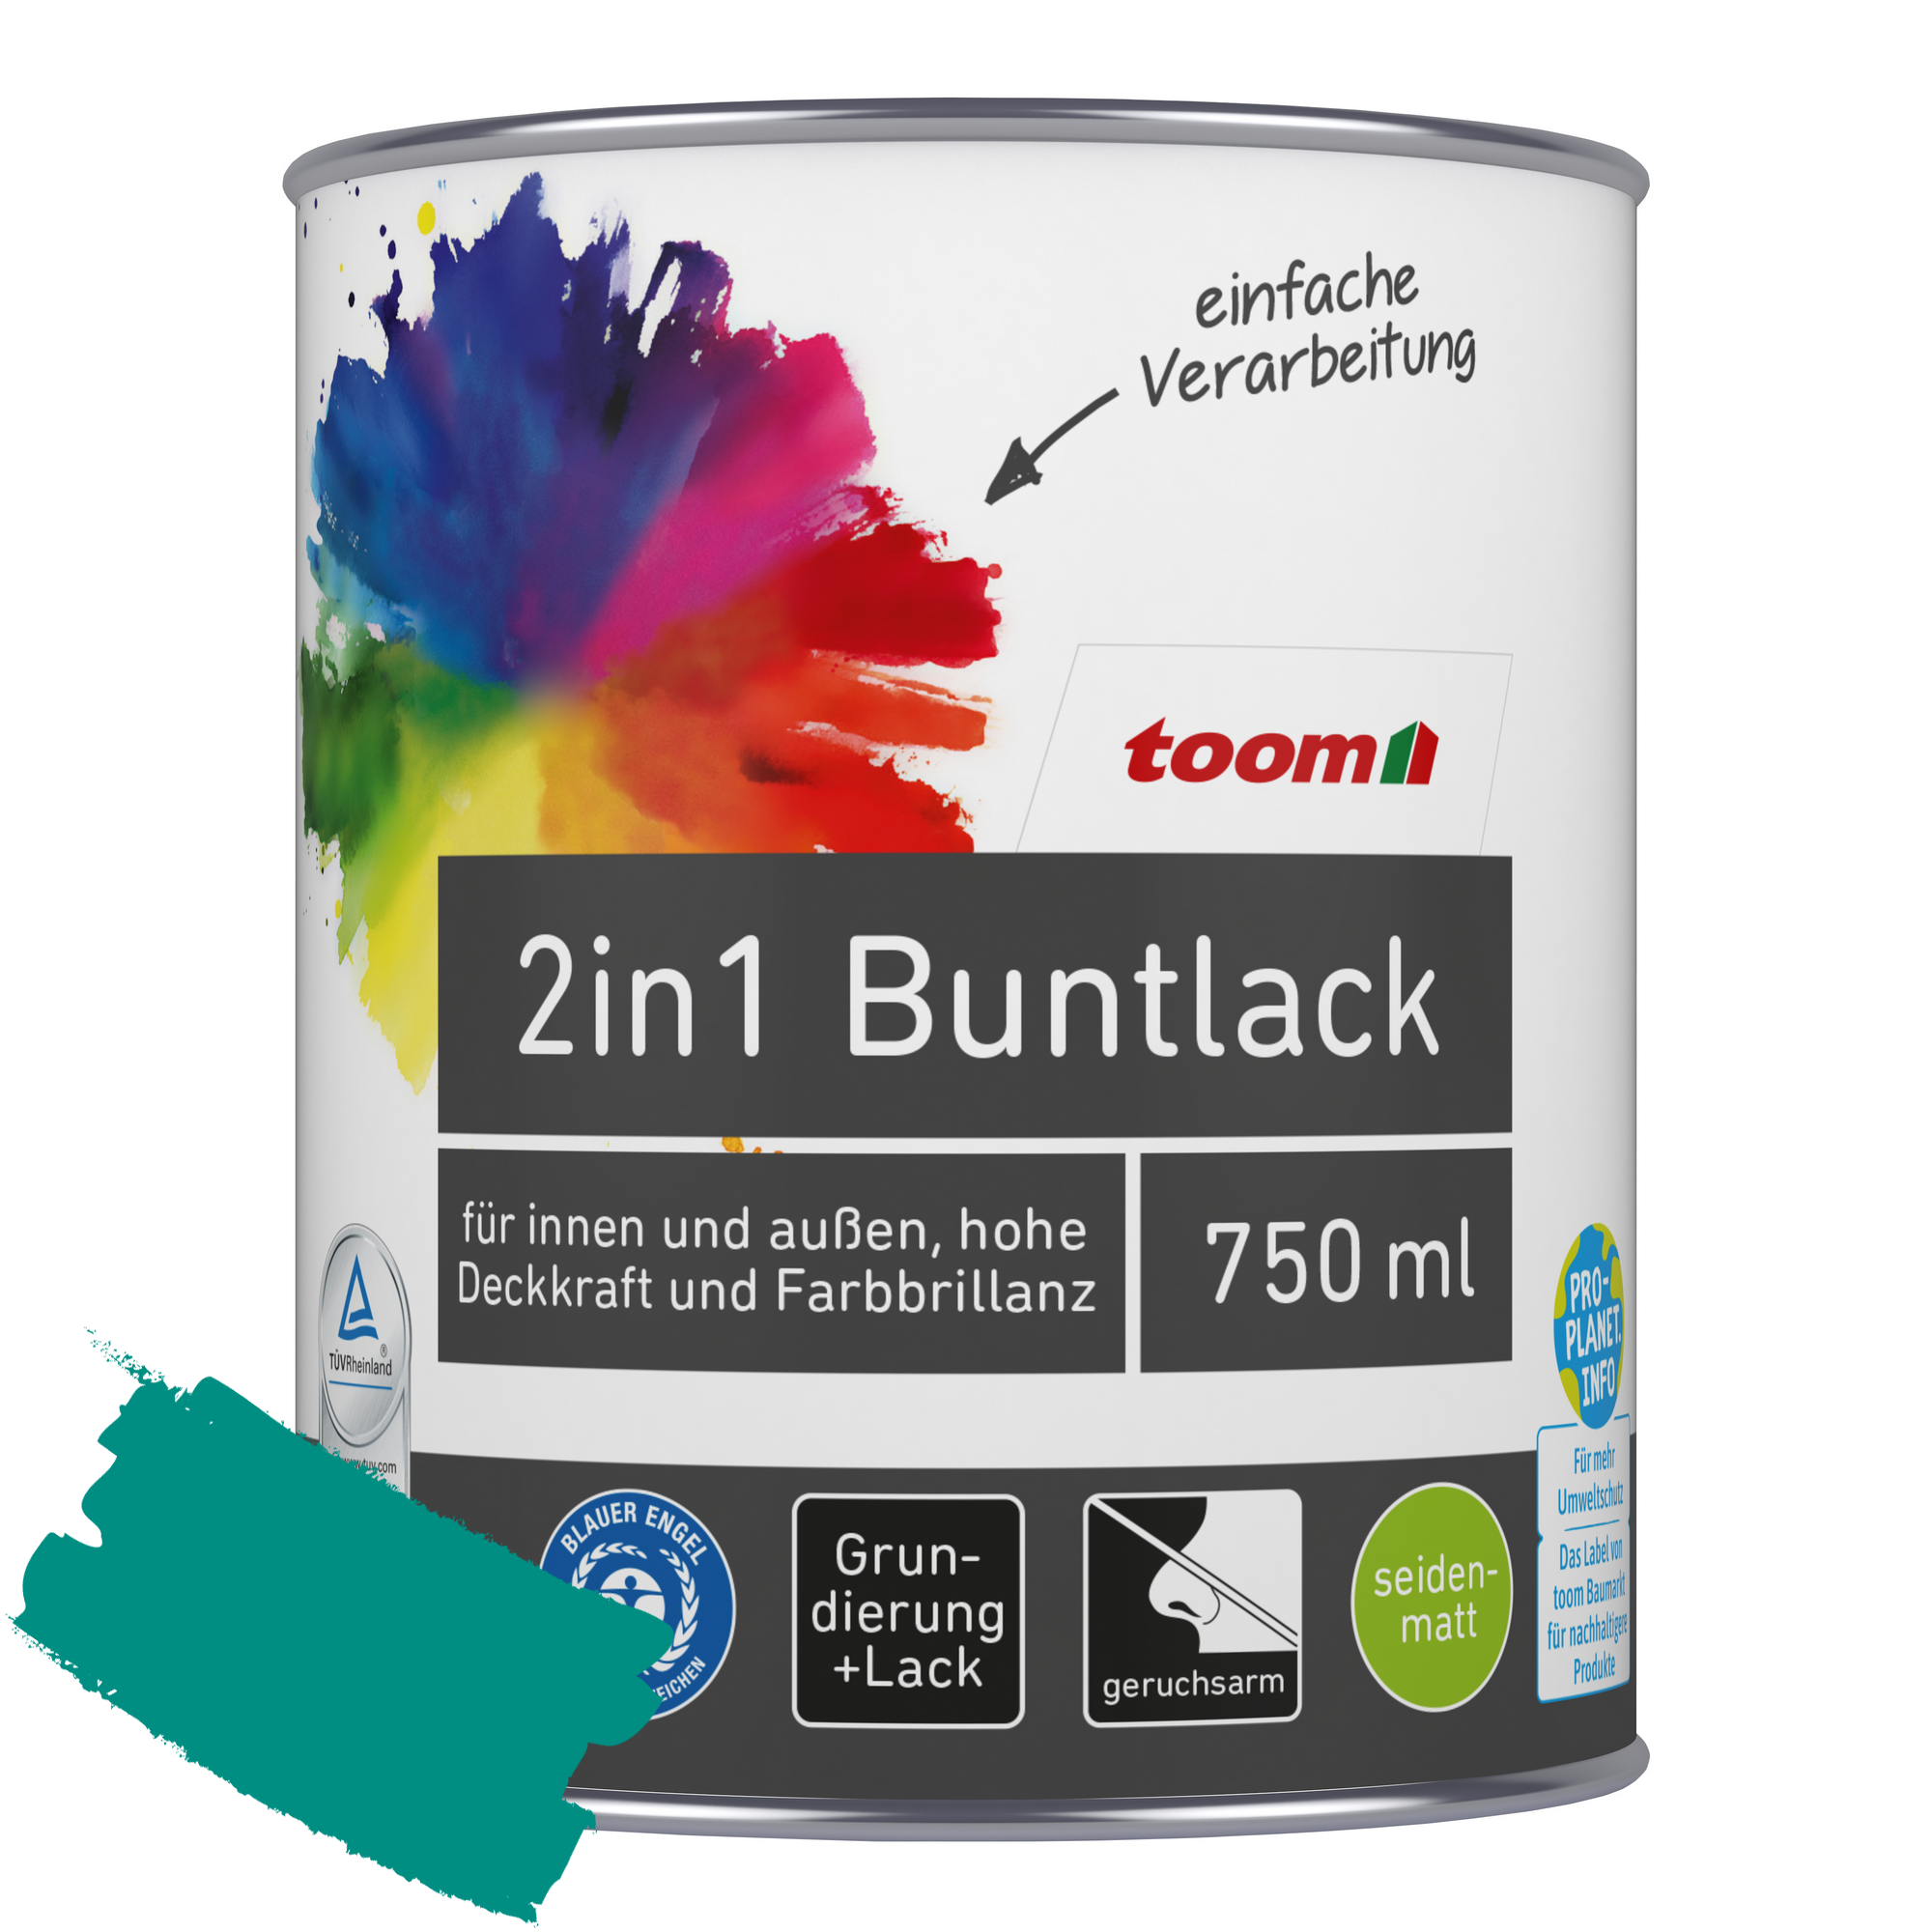 2in1 Buntlack 'Südseetraum' petrolfarben seidenmatt 750 ml + product picture